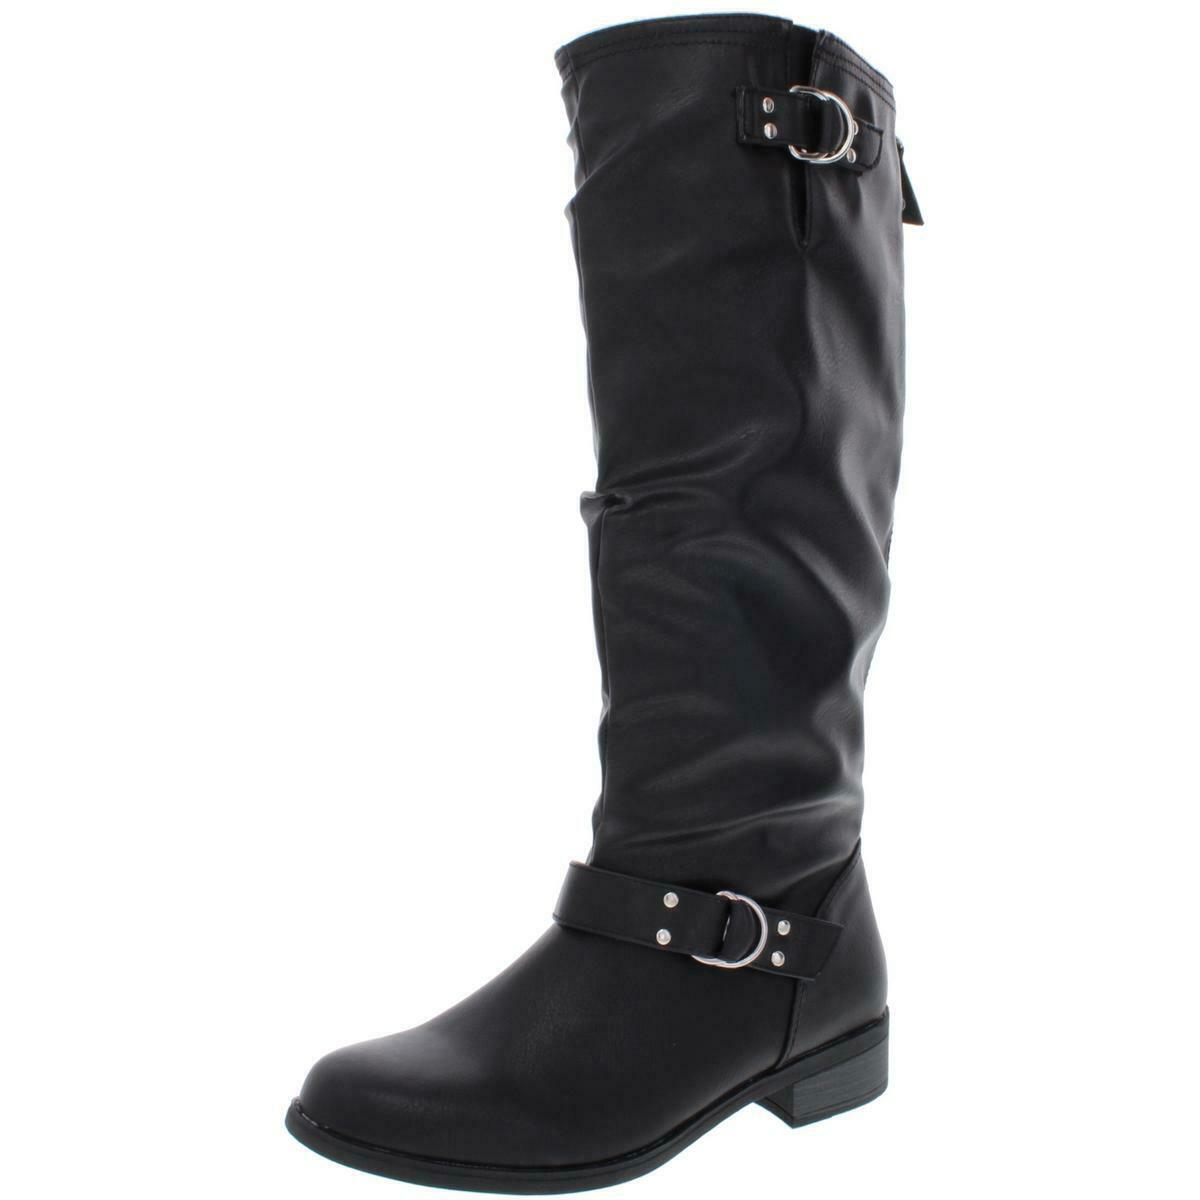 XOXO Womens Minkler Black Tall Riding Boots Shoes 7.5 Medium (B,M) BHFO 2465